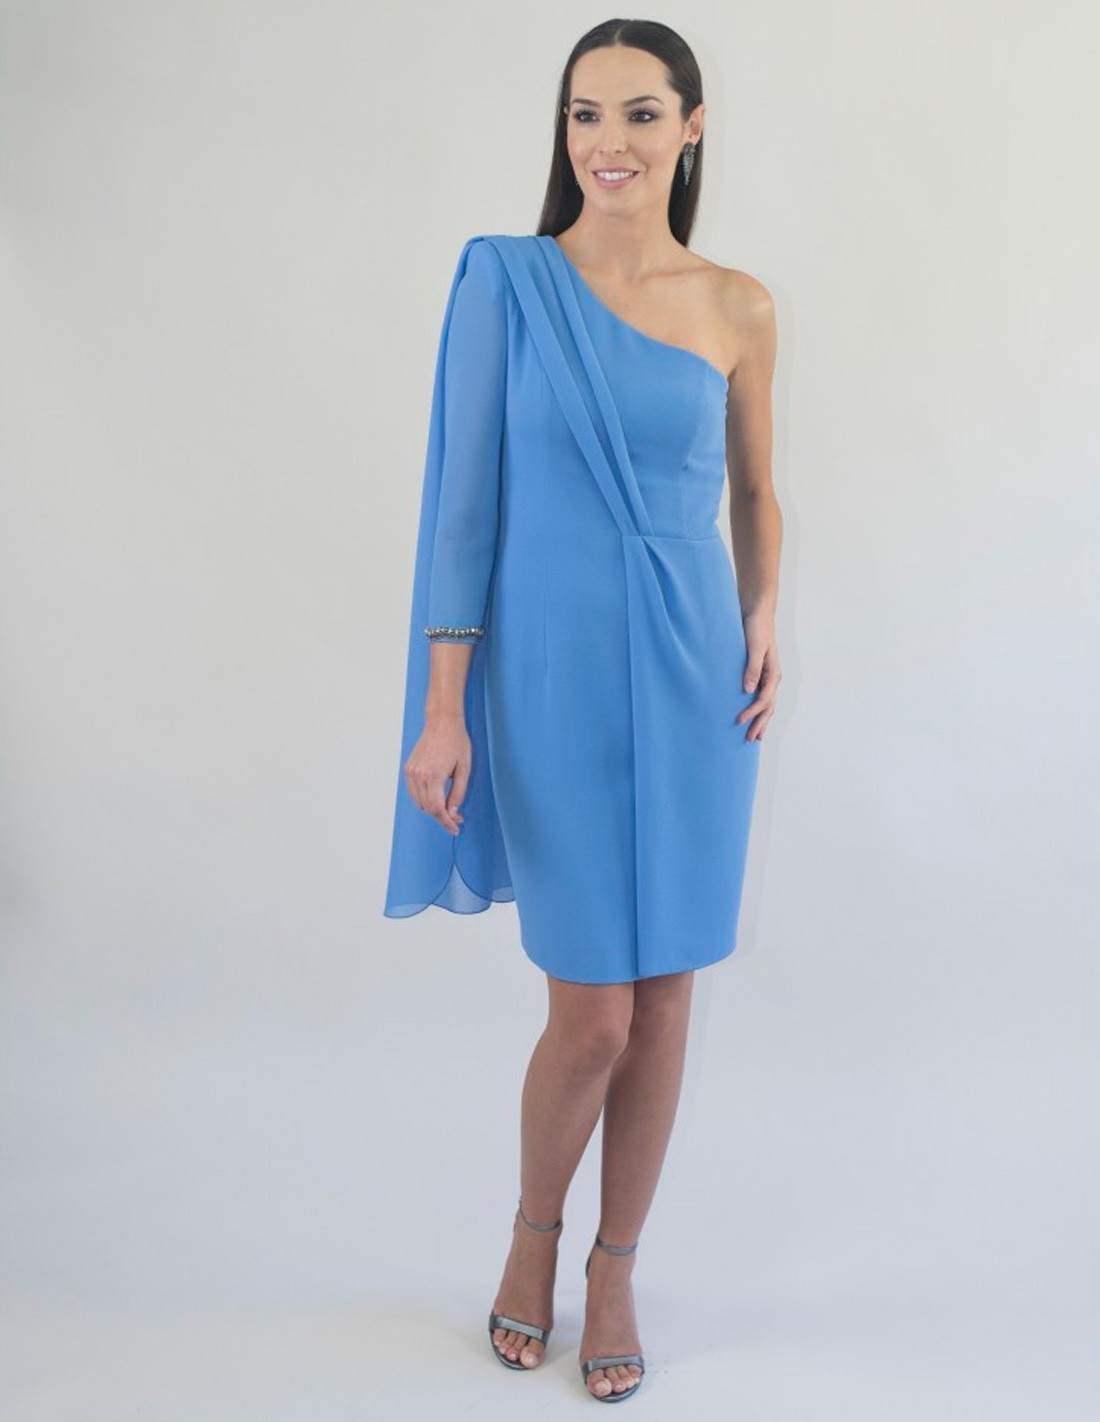 Asymmetric blue cocktail dress for guest | INVITADISIMA